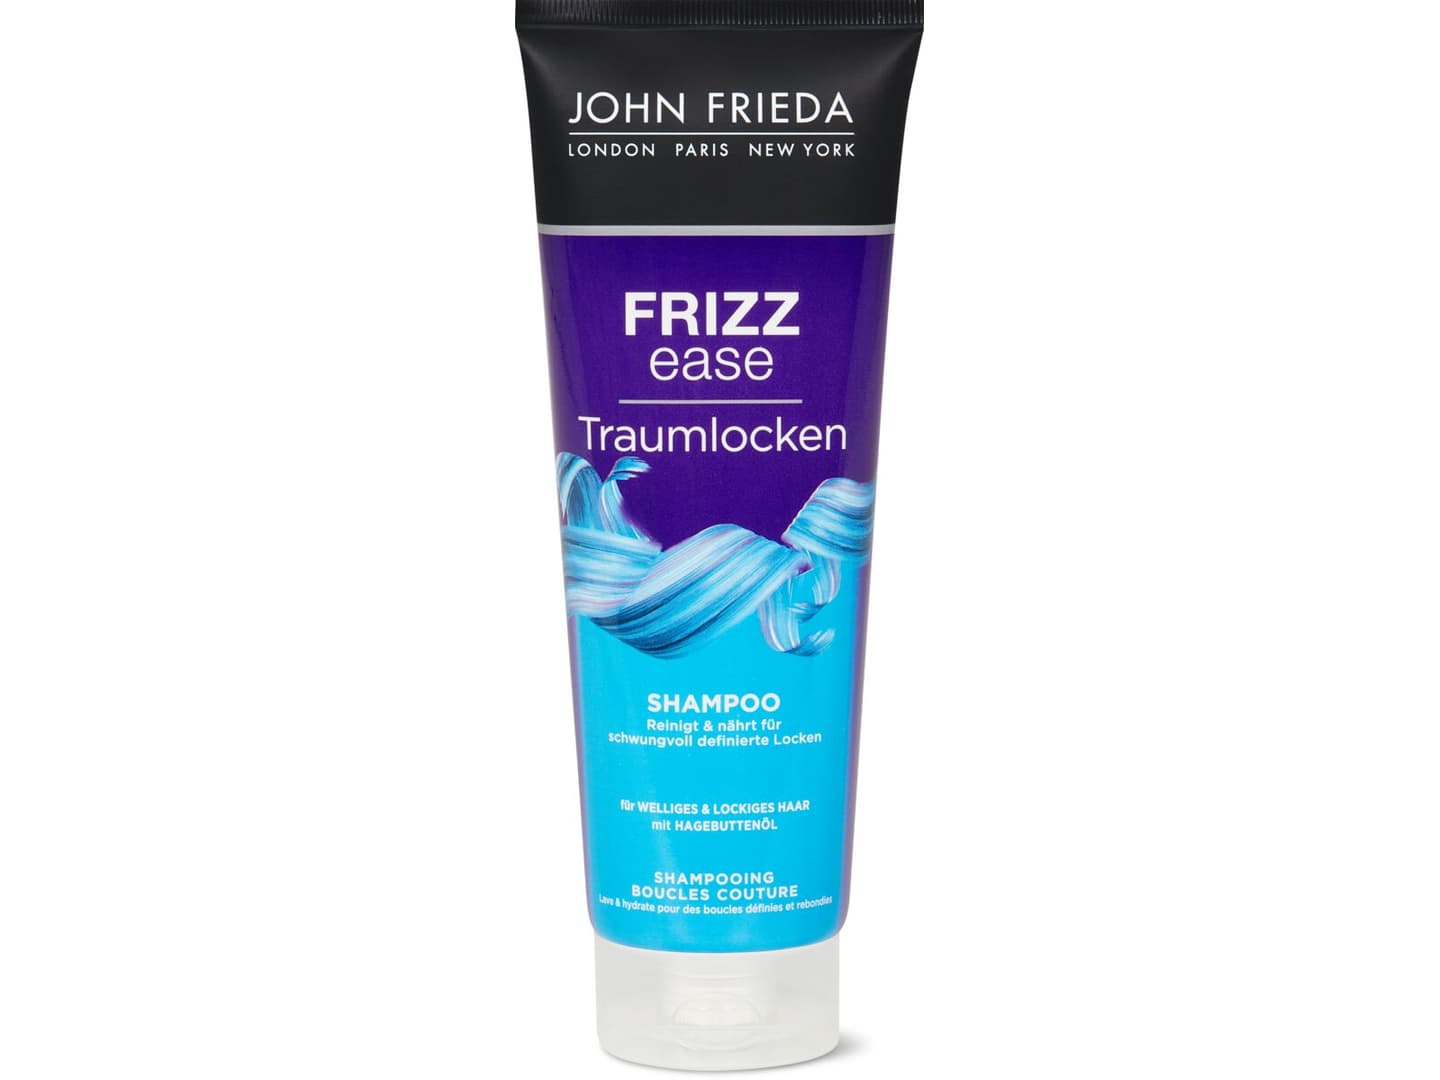 4. "John Frieda Frizz Ease Dream Curls Shampoo" - wide 4